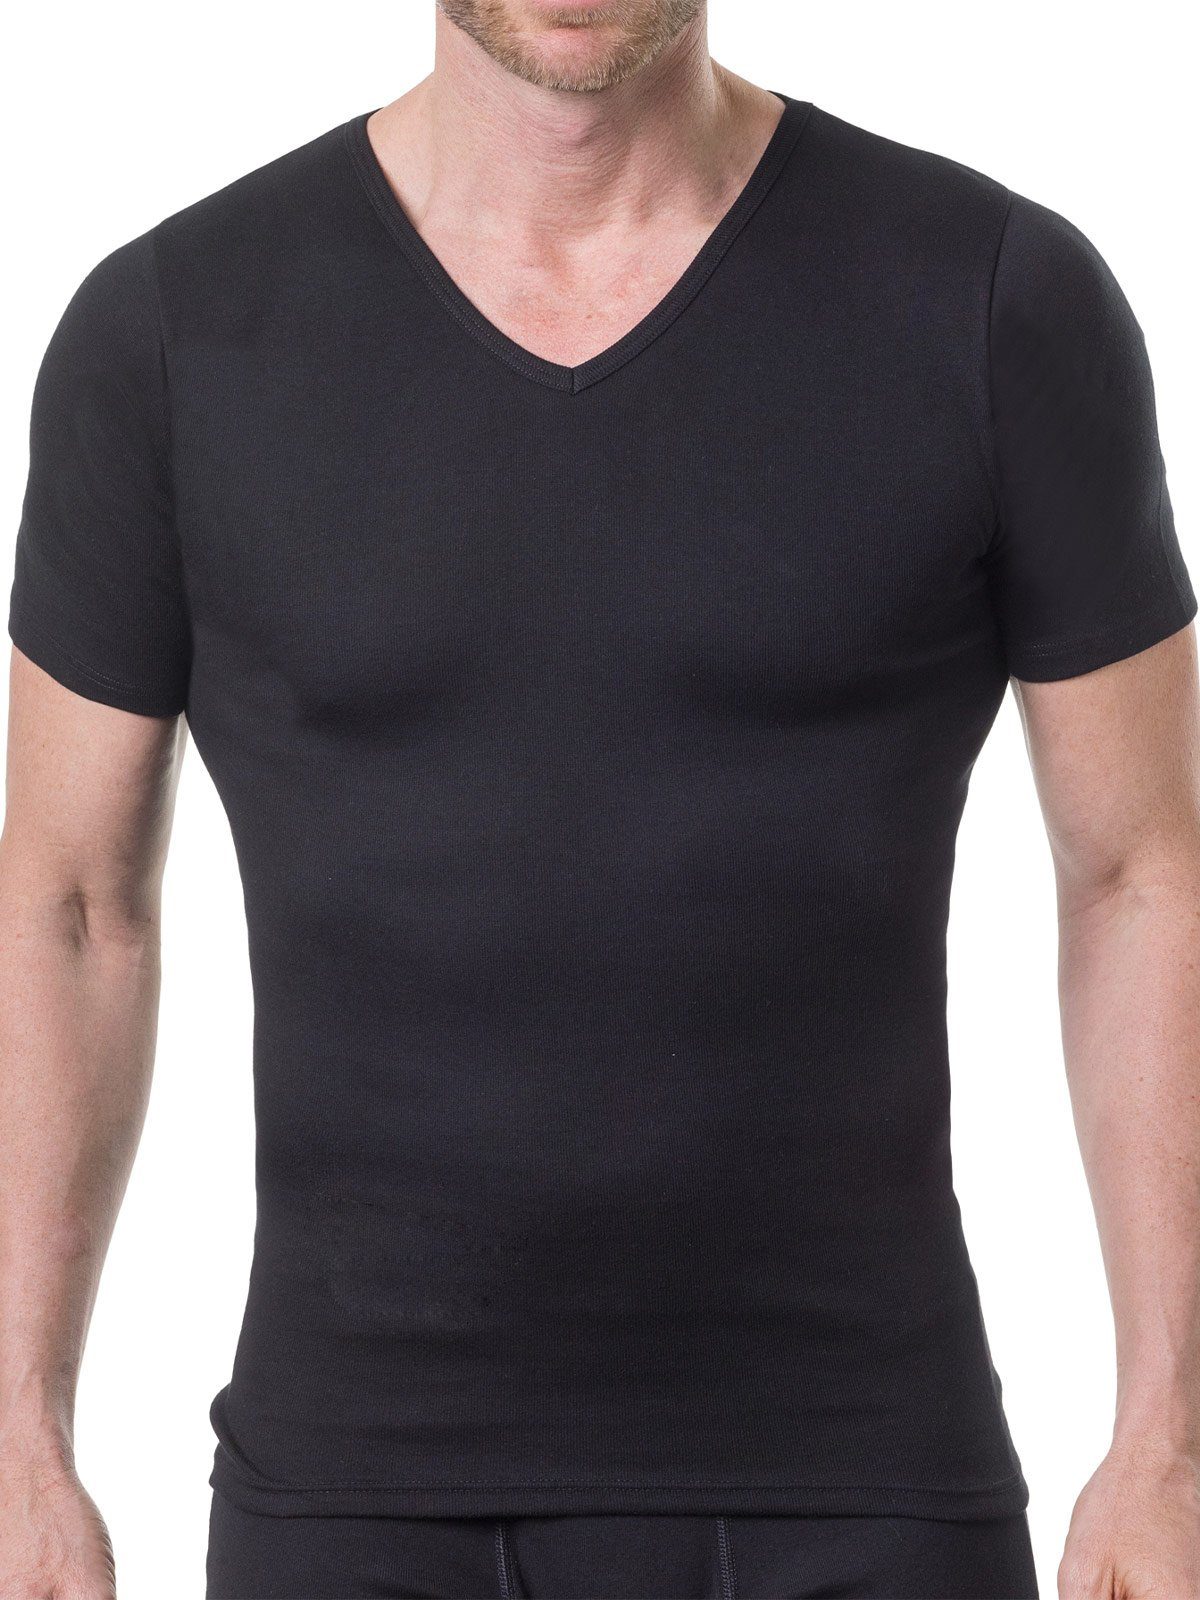 8er Cotton schwarz T-Shirt hohe Unterziehshirt Herren Markenqualität 8-St) KUMPF weiss Bio (Spar-Set, Sparpack